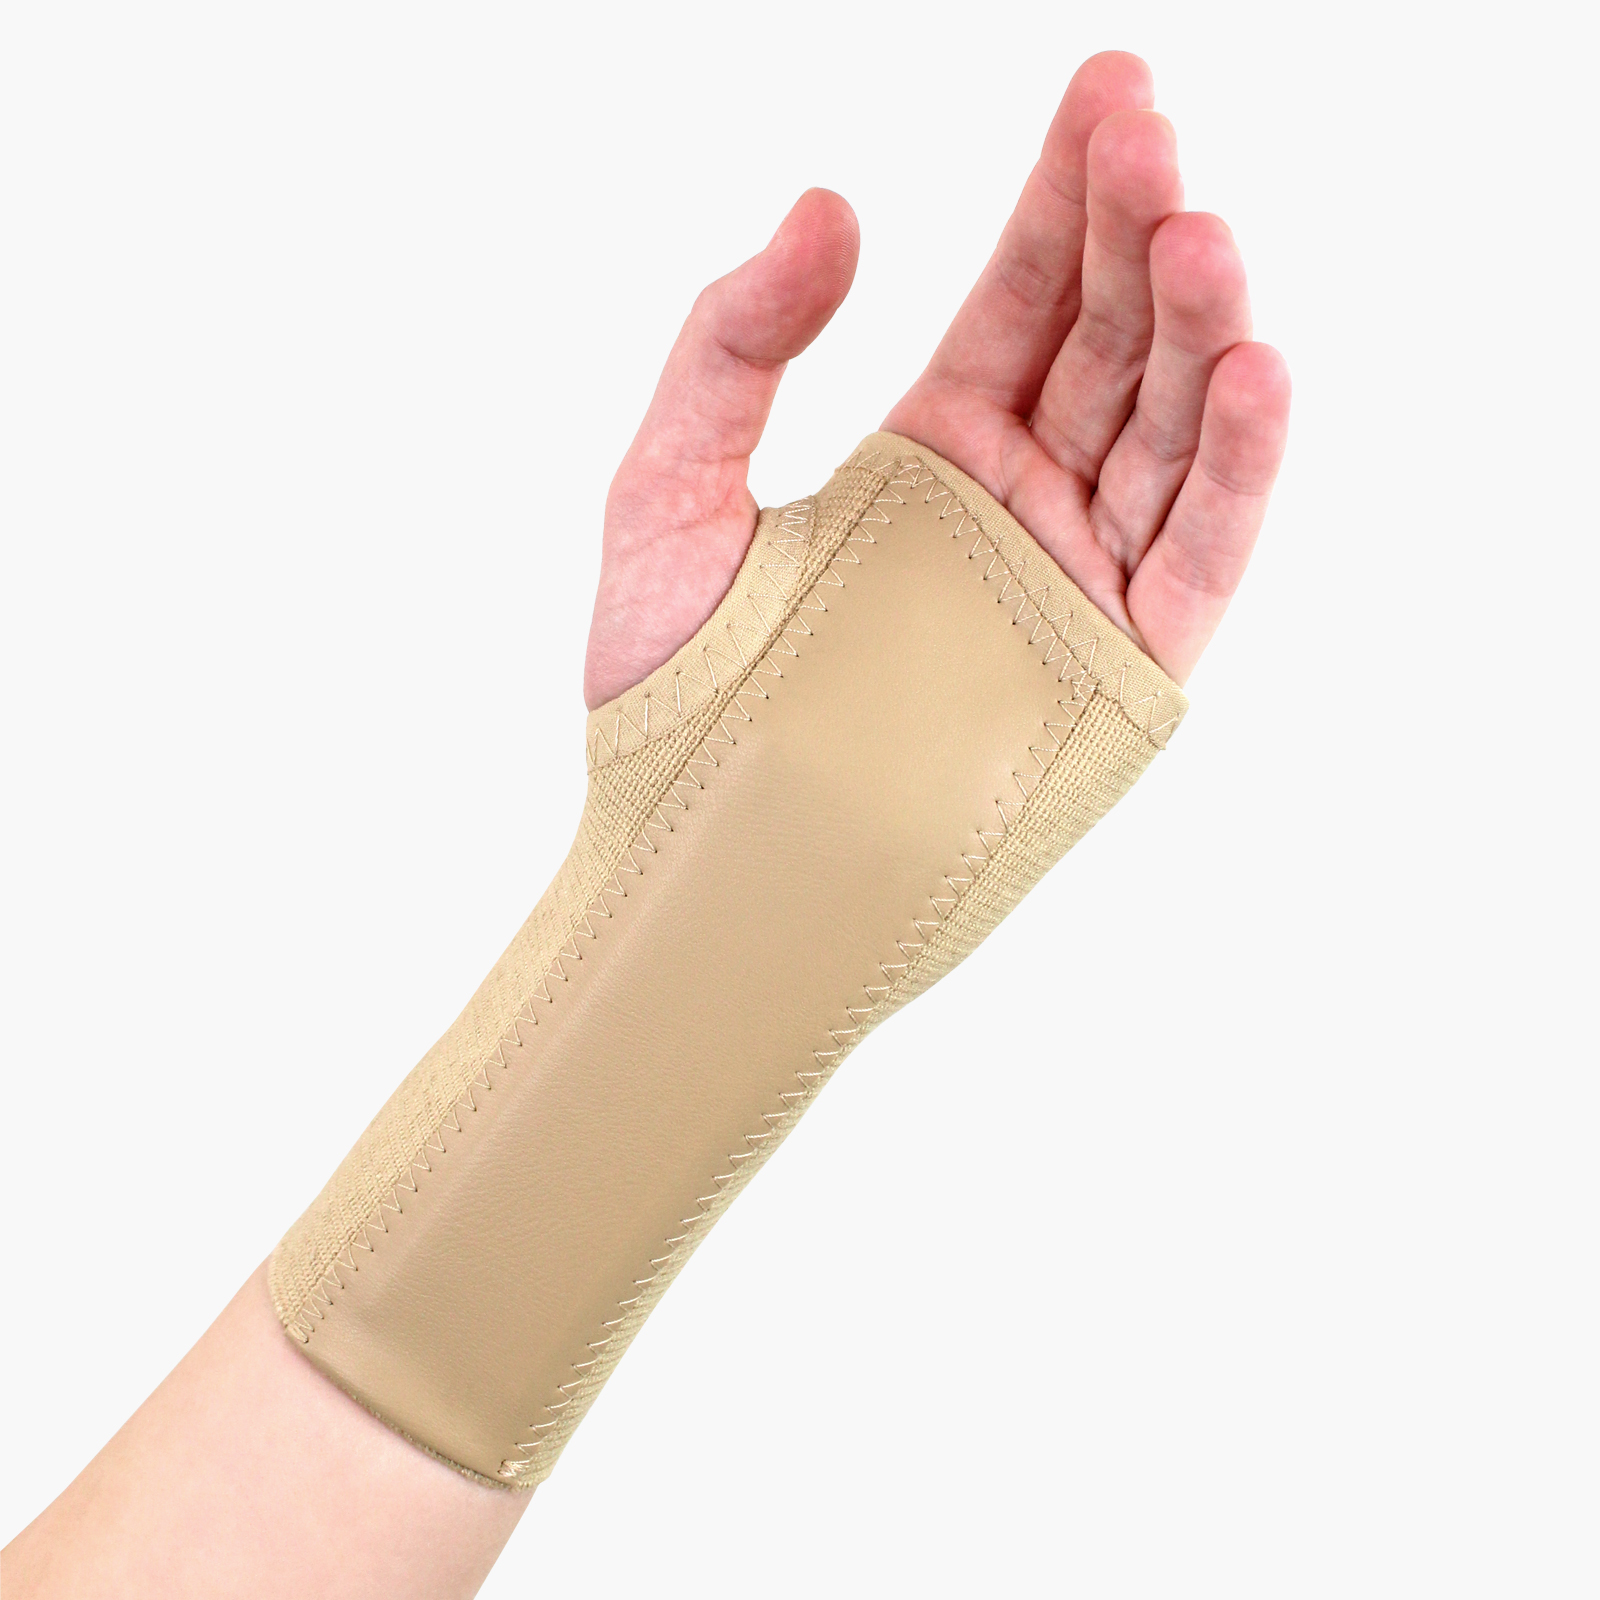 Wrist & Hand Braces, Bracing Products